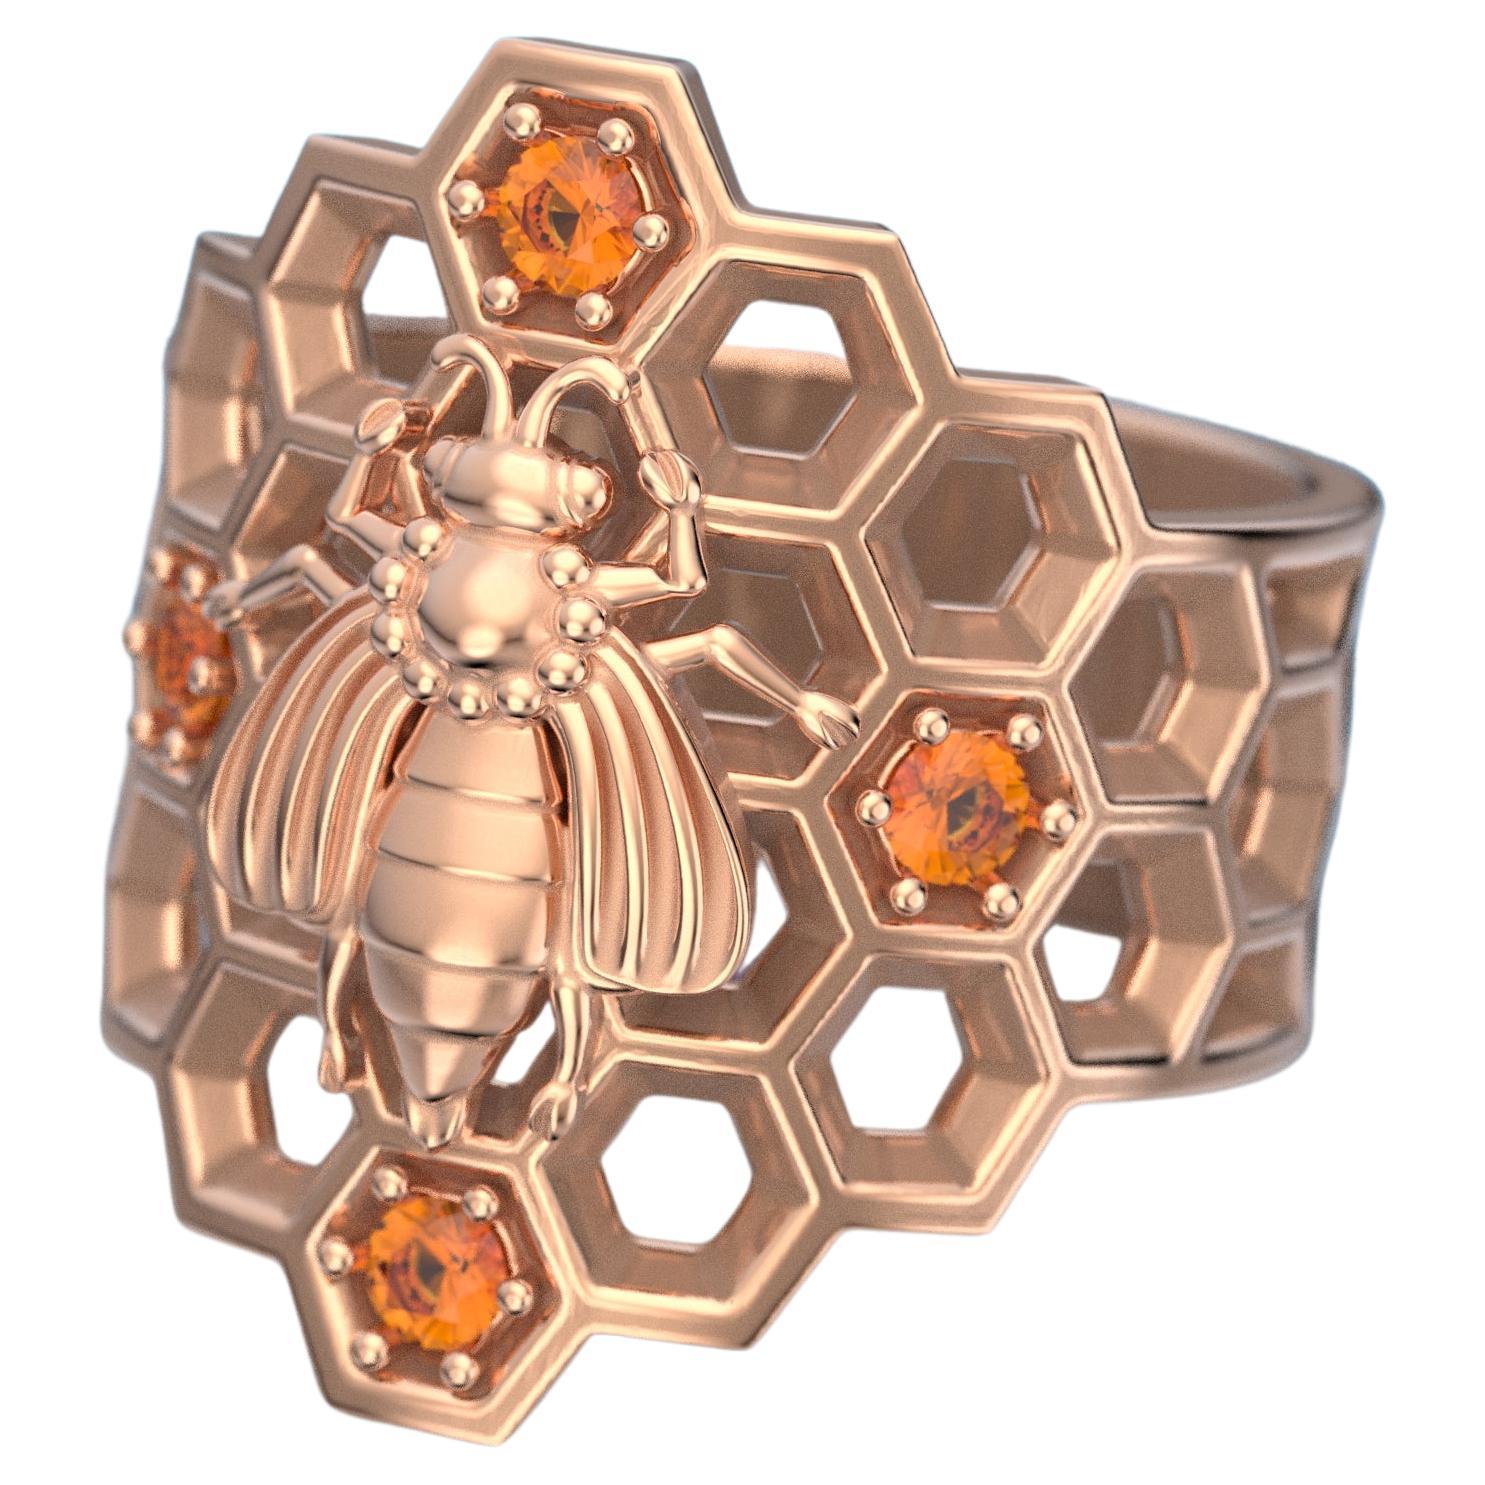 For Sale:   Honeycomb Bee Ring in 14k Solid Gold with natural Orange Spessartite Garnet